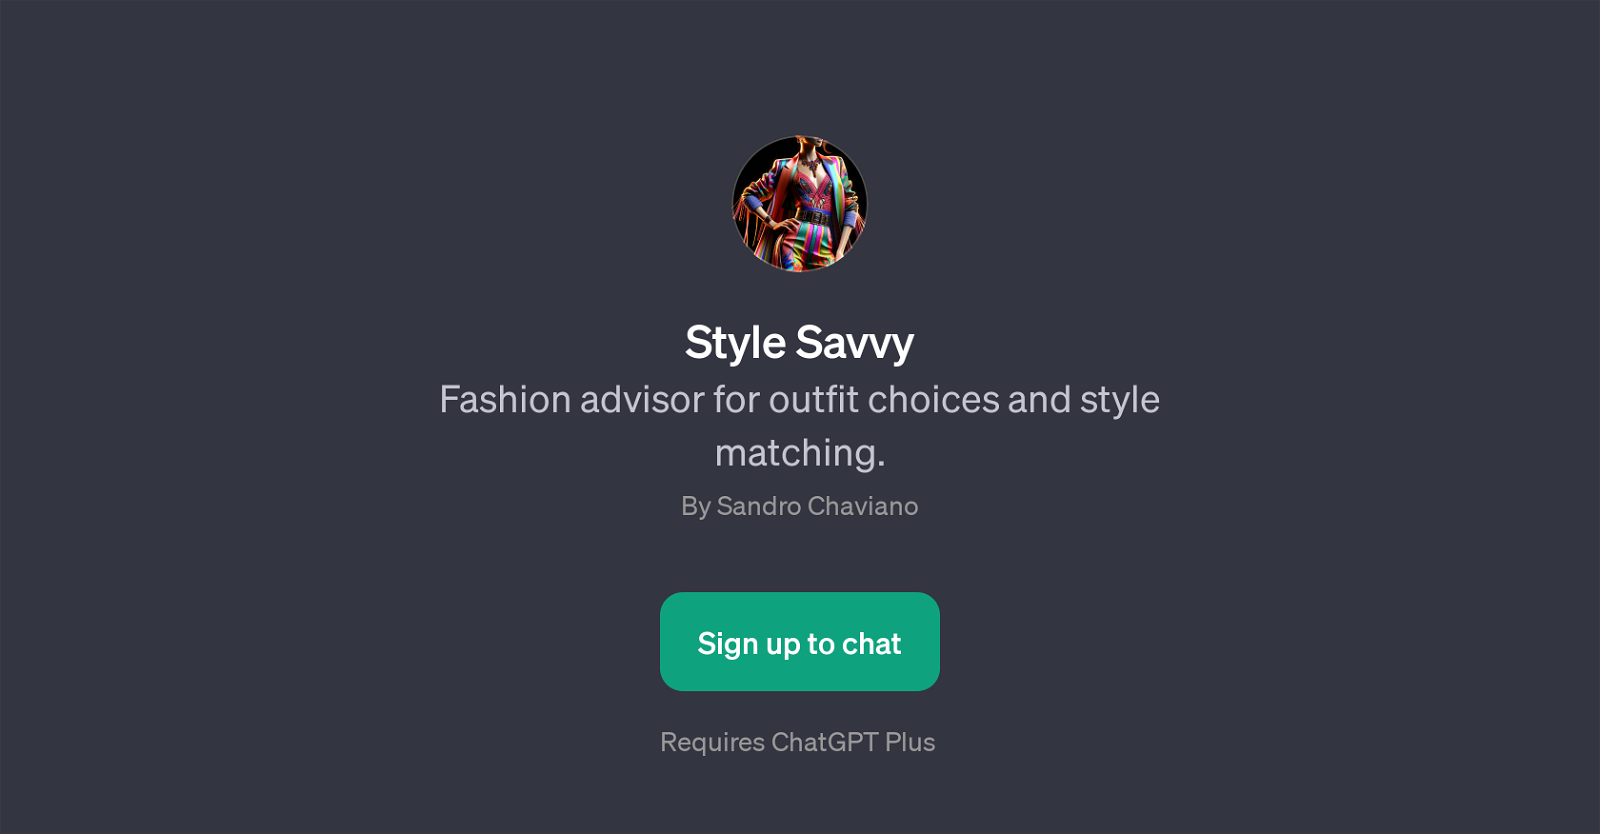 Style Savvy website